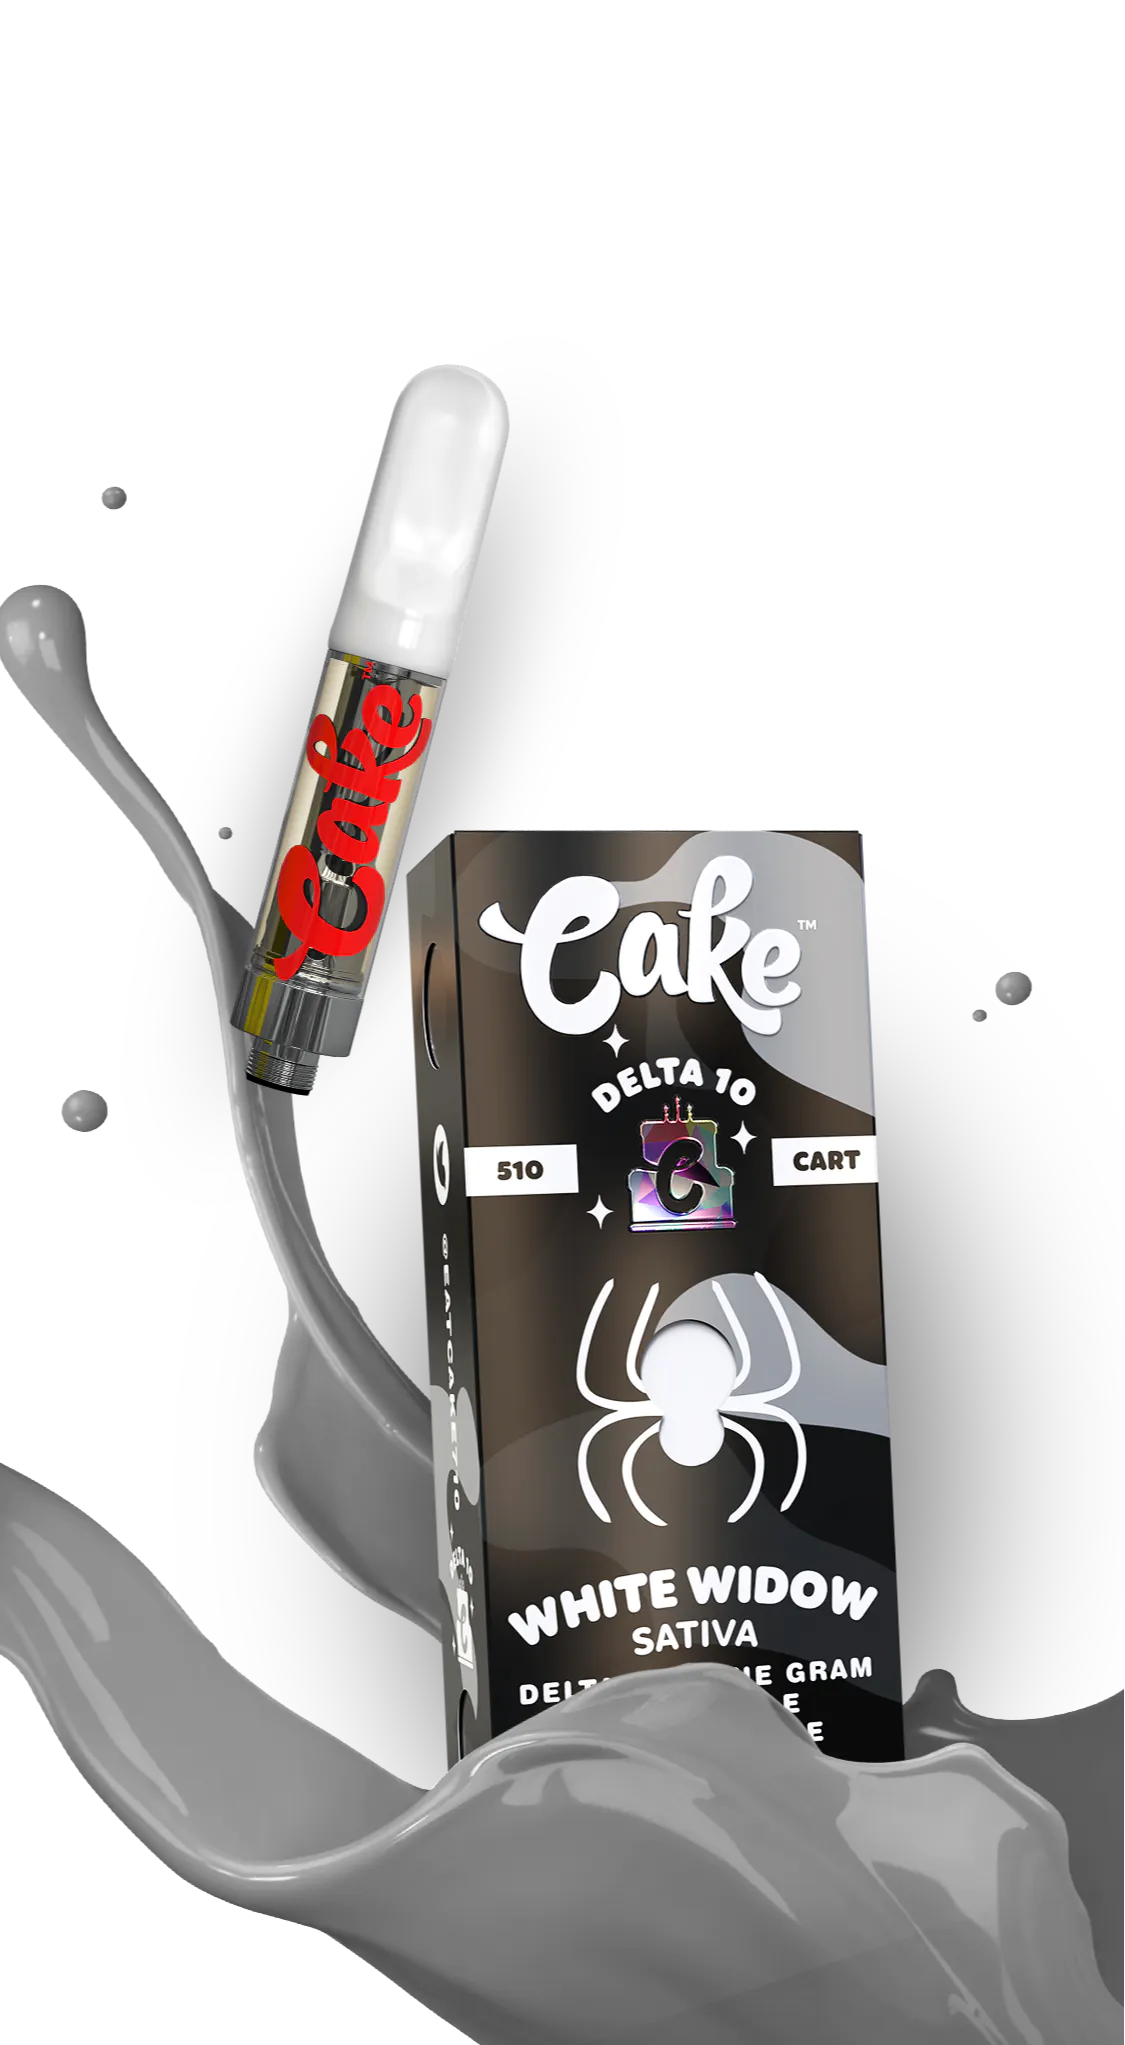 Cake - Delta 10 510 Cartridge - 1G Vape Cake White Widow  